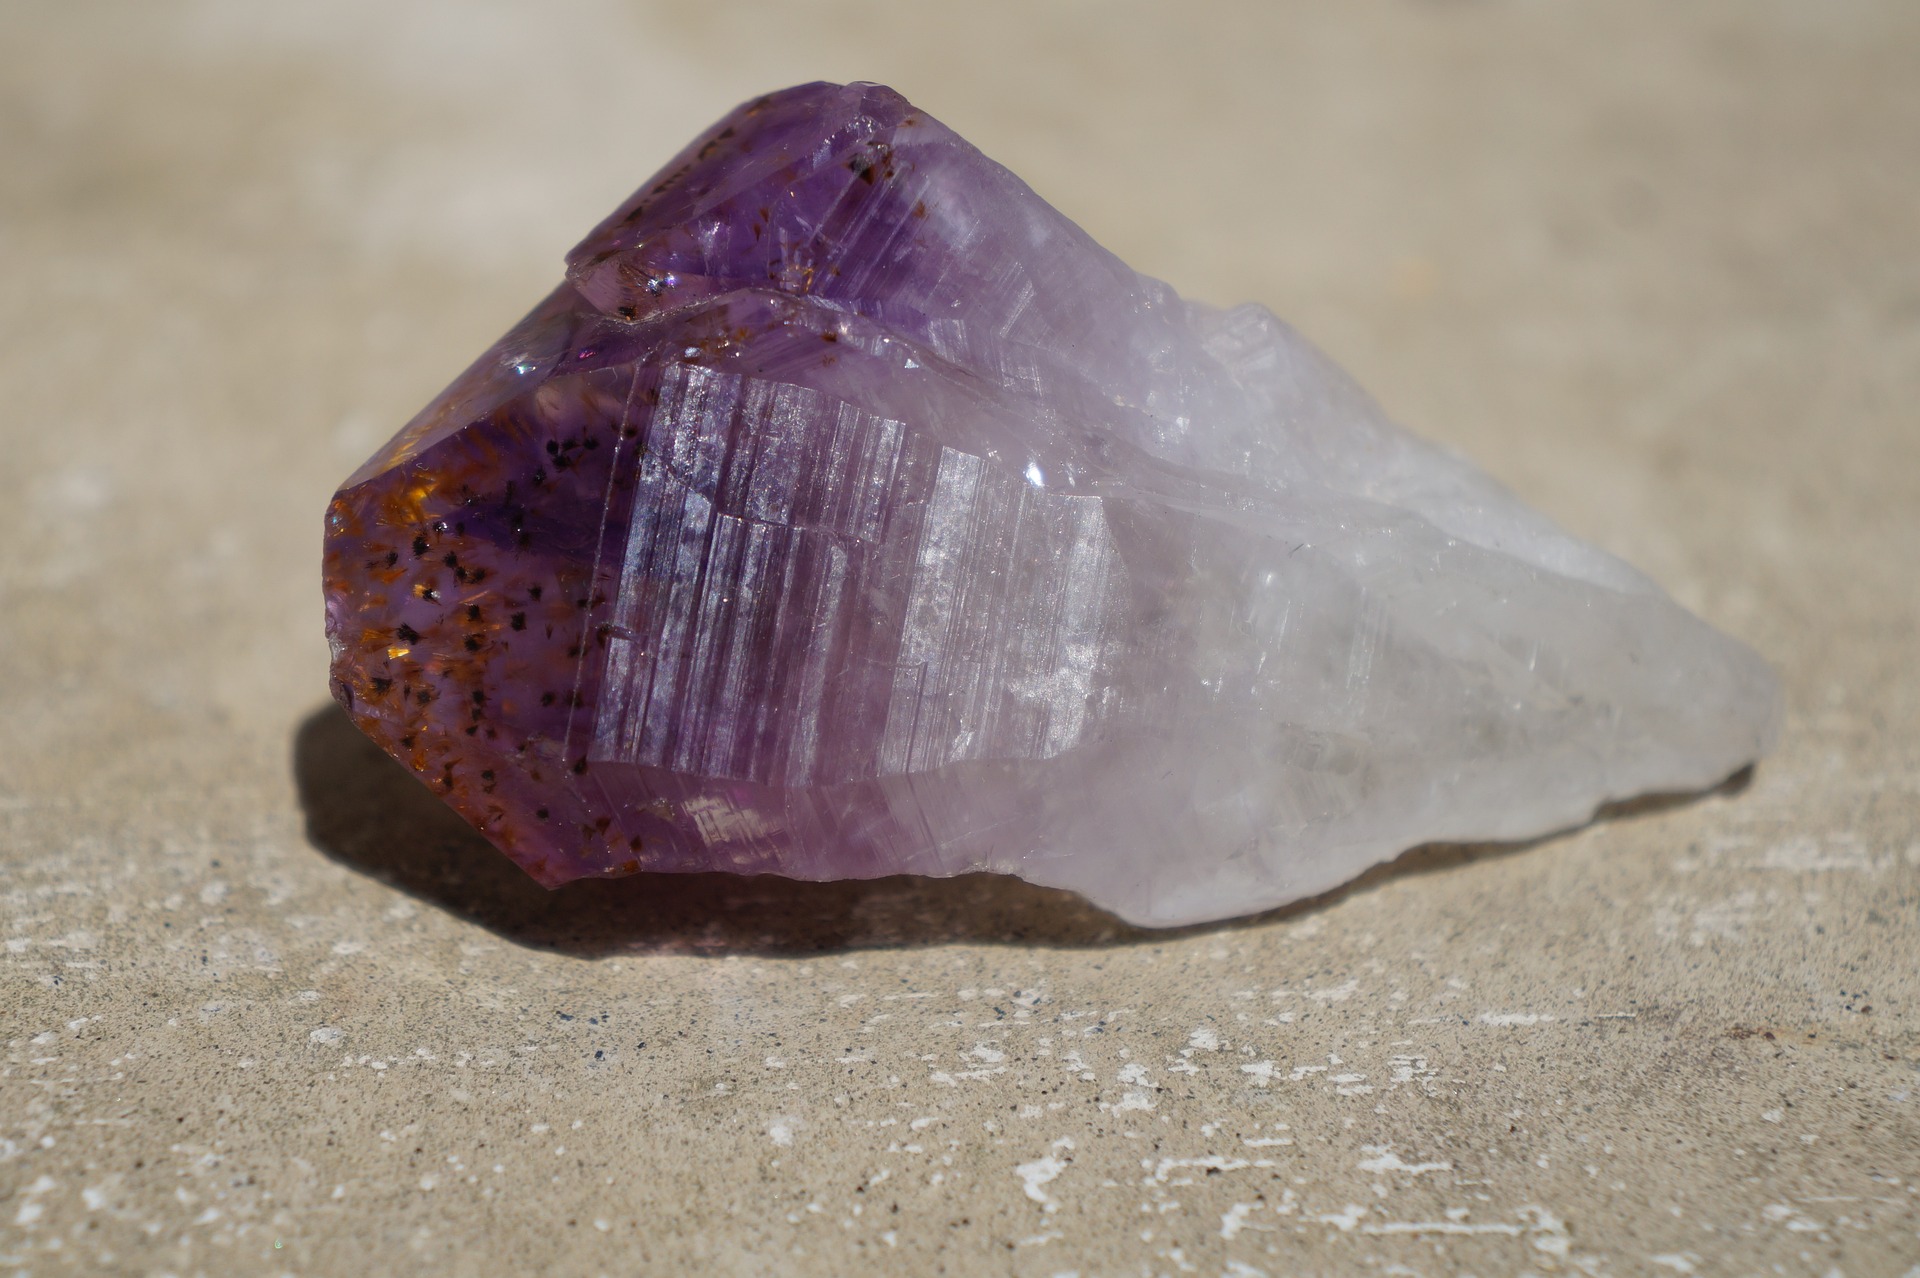 A piece of amethyst quartz